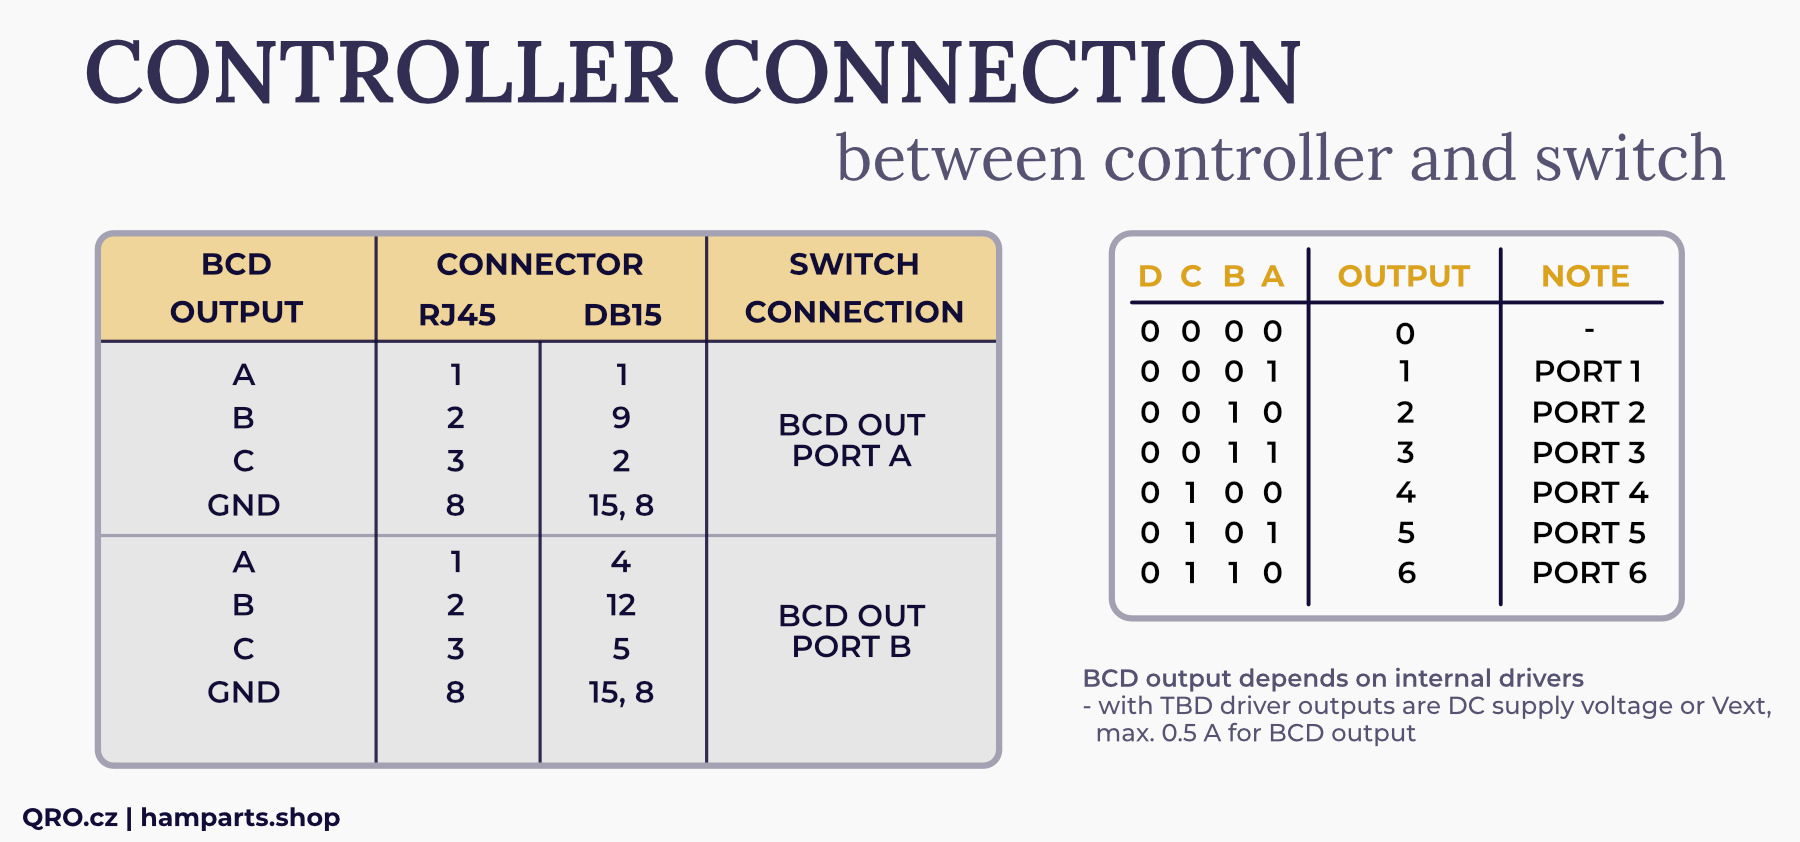 6-2 easy controller connection BCD matrix table qro.cz hamparts.shop